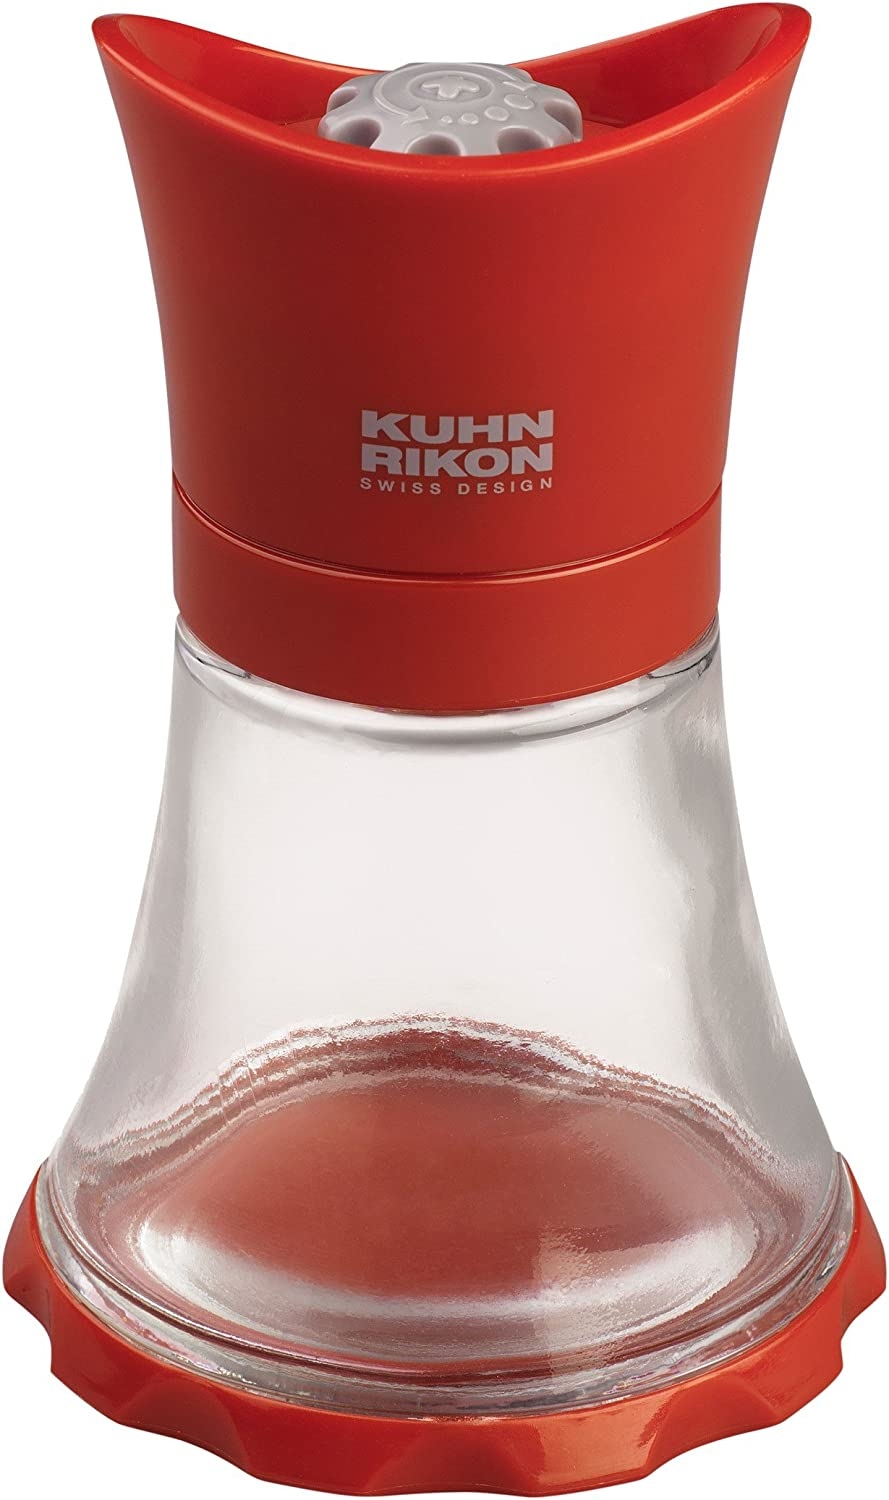 Kuhn Rikon Vase Grinder, Mini, Black Import To Shop ×Product customization General Description Gallery Reviews Variations